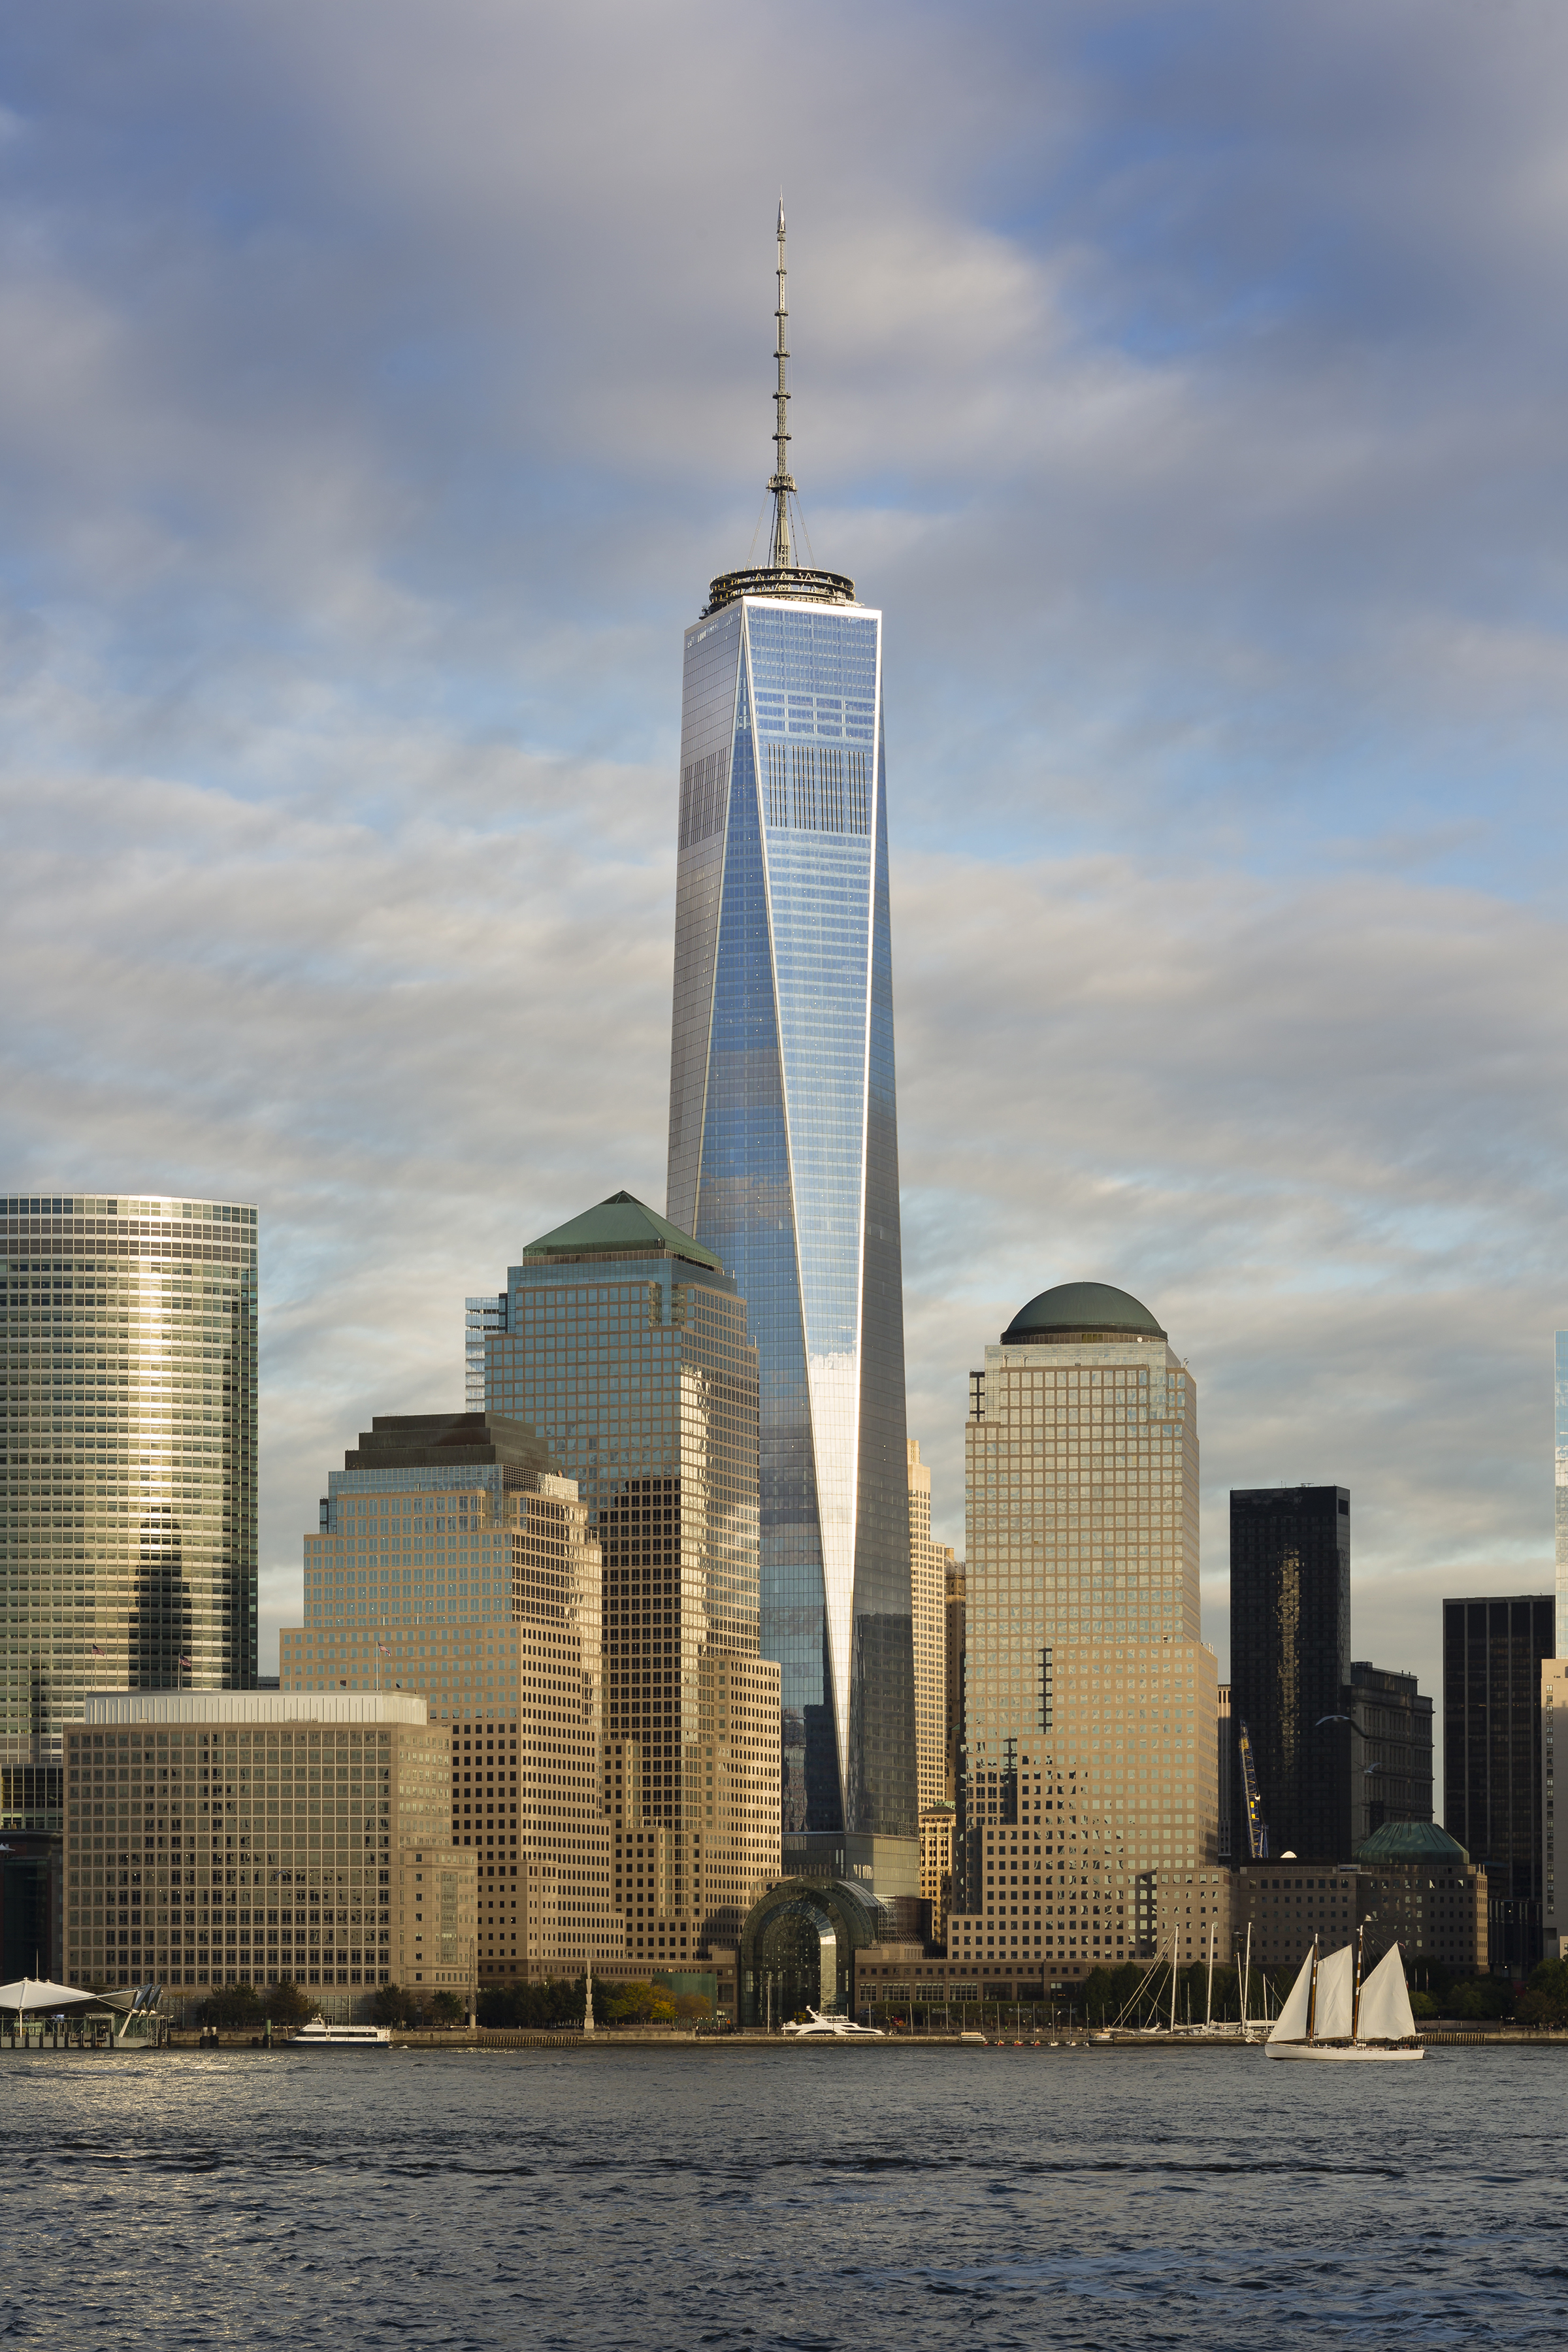 One world new york. ВТЦ 1 башня свободы. ВТЦ 1 Нью-Йорк. Всемирный торговый центр 1 Нью-Йорк. ВТЦ Нью-Йорк 2020.